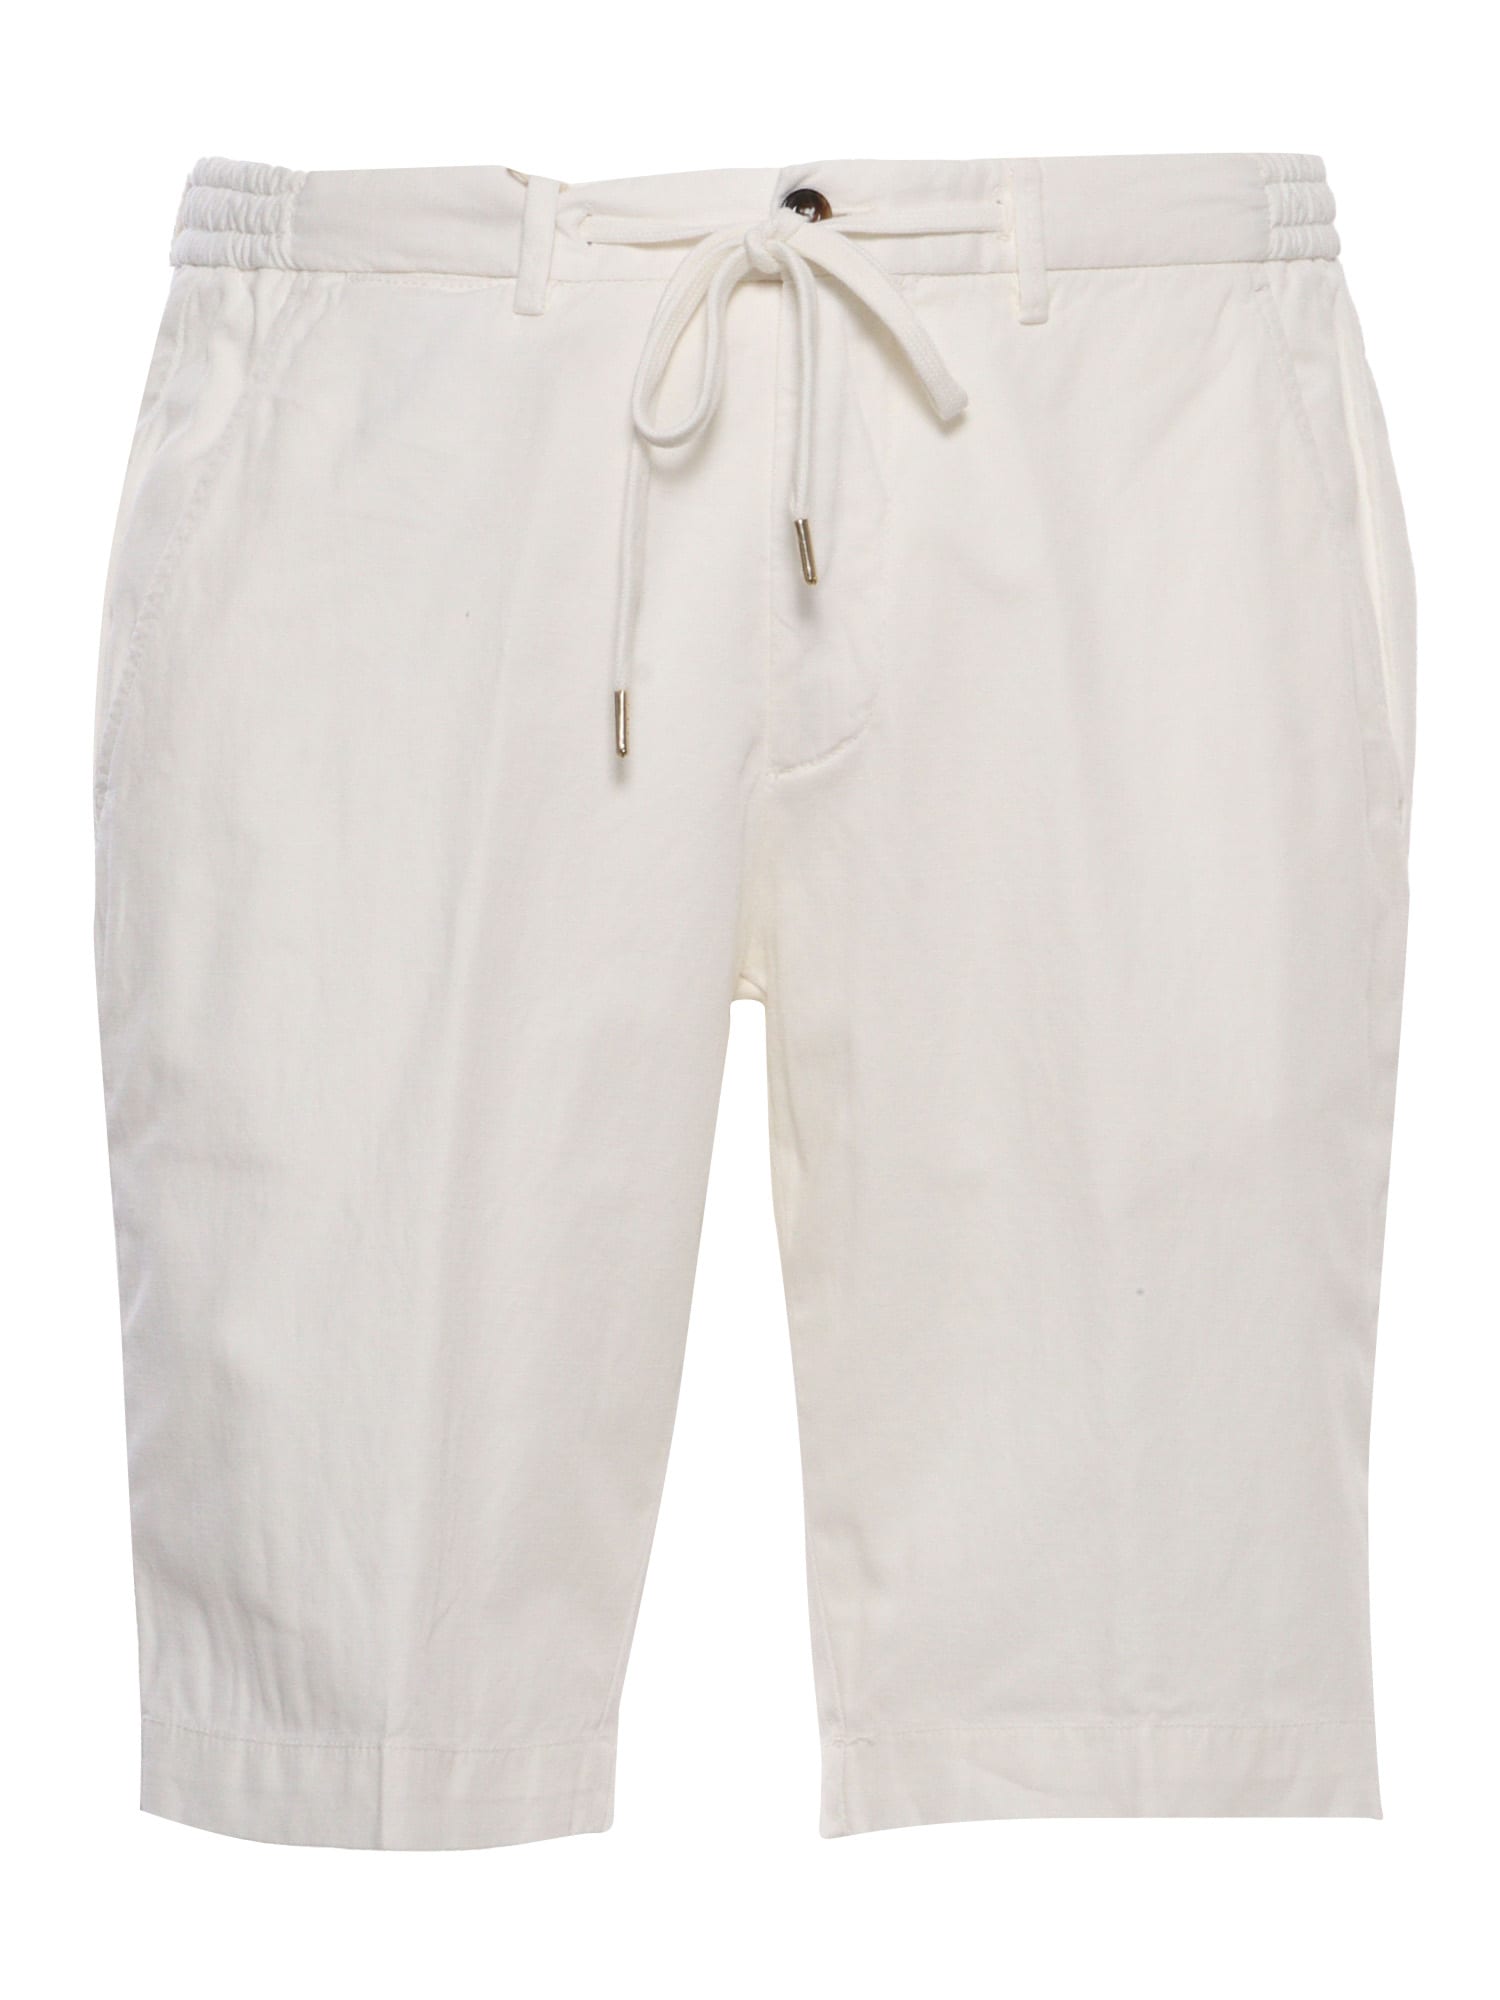 Shop Briglia 1949 White Bermuda Shorts